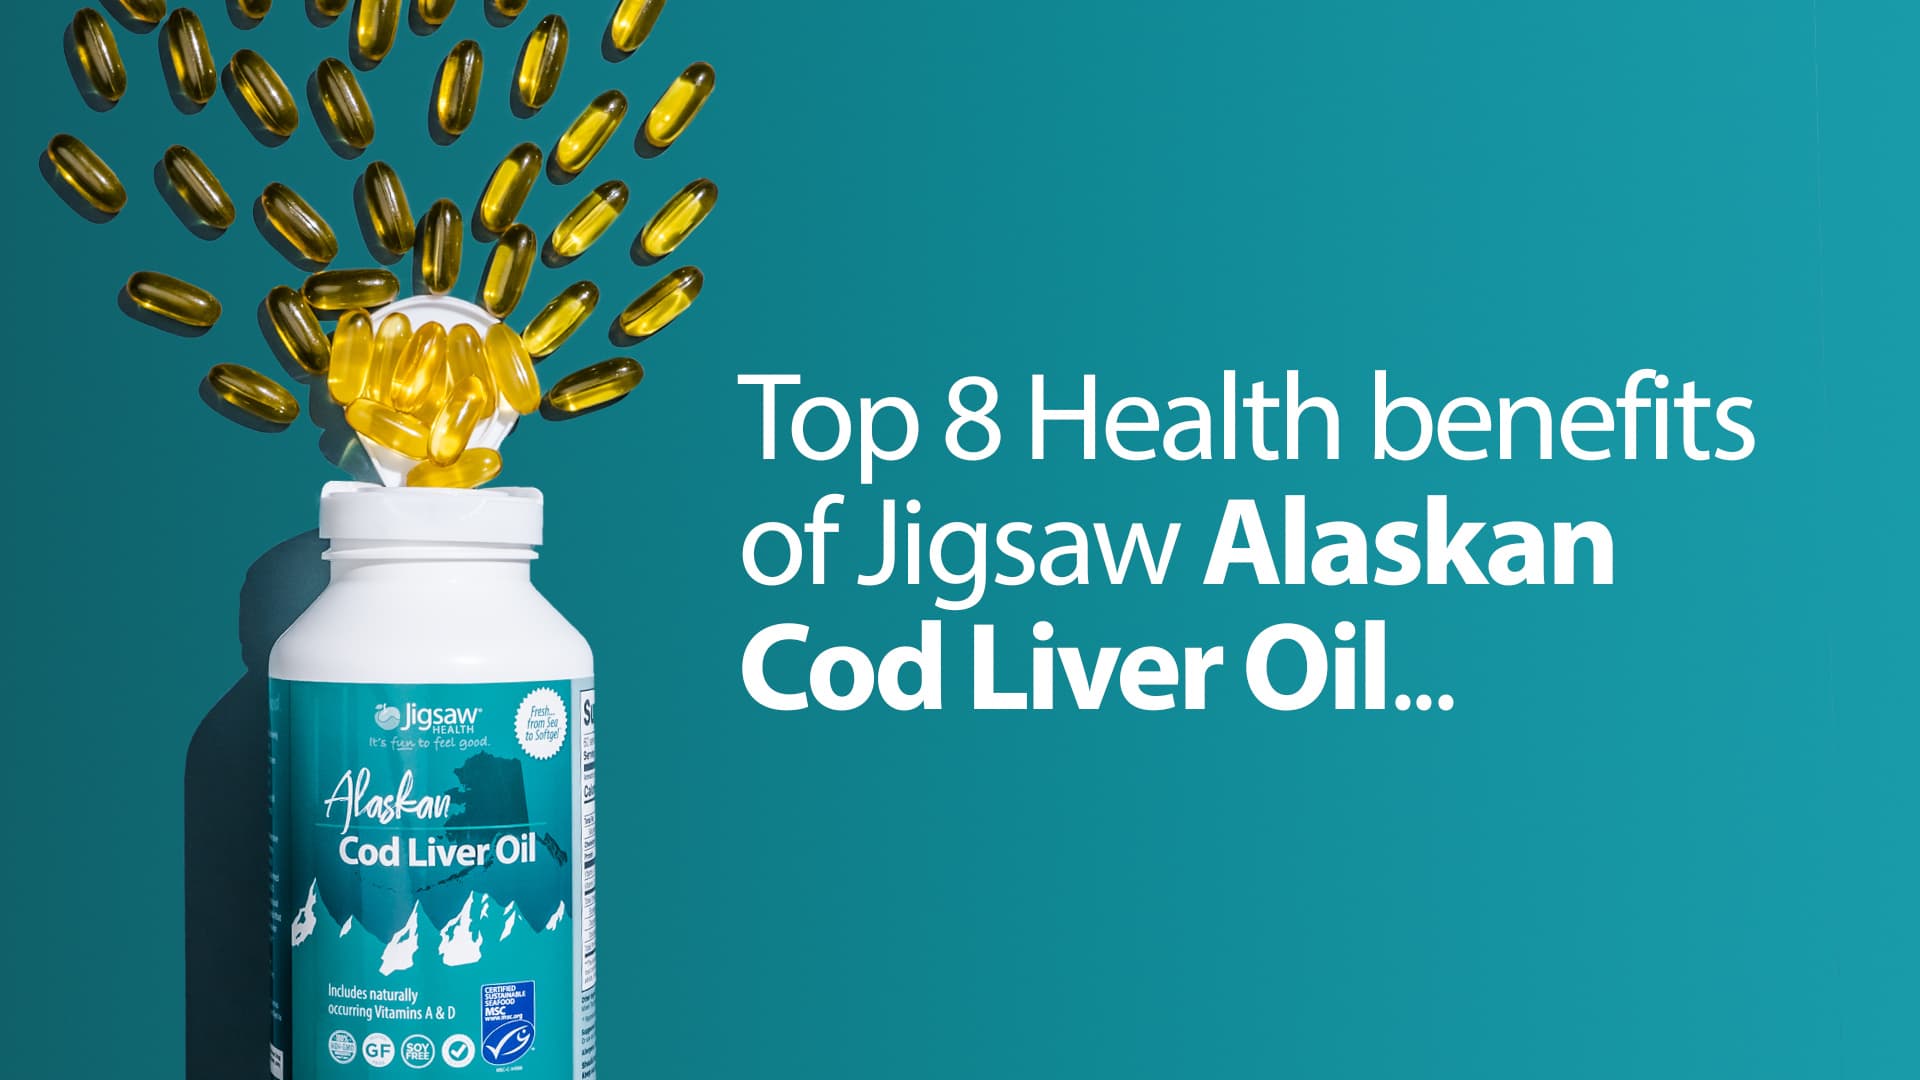 Top 8 Health Benefits of Jigsaw Alaskan Cod Liver Oil...